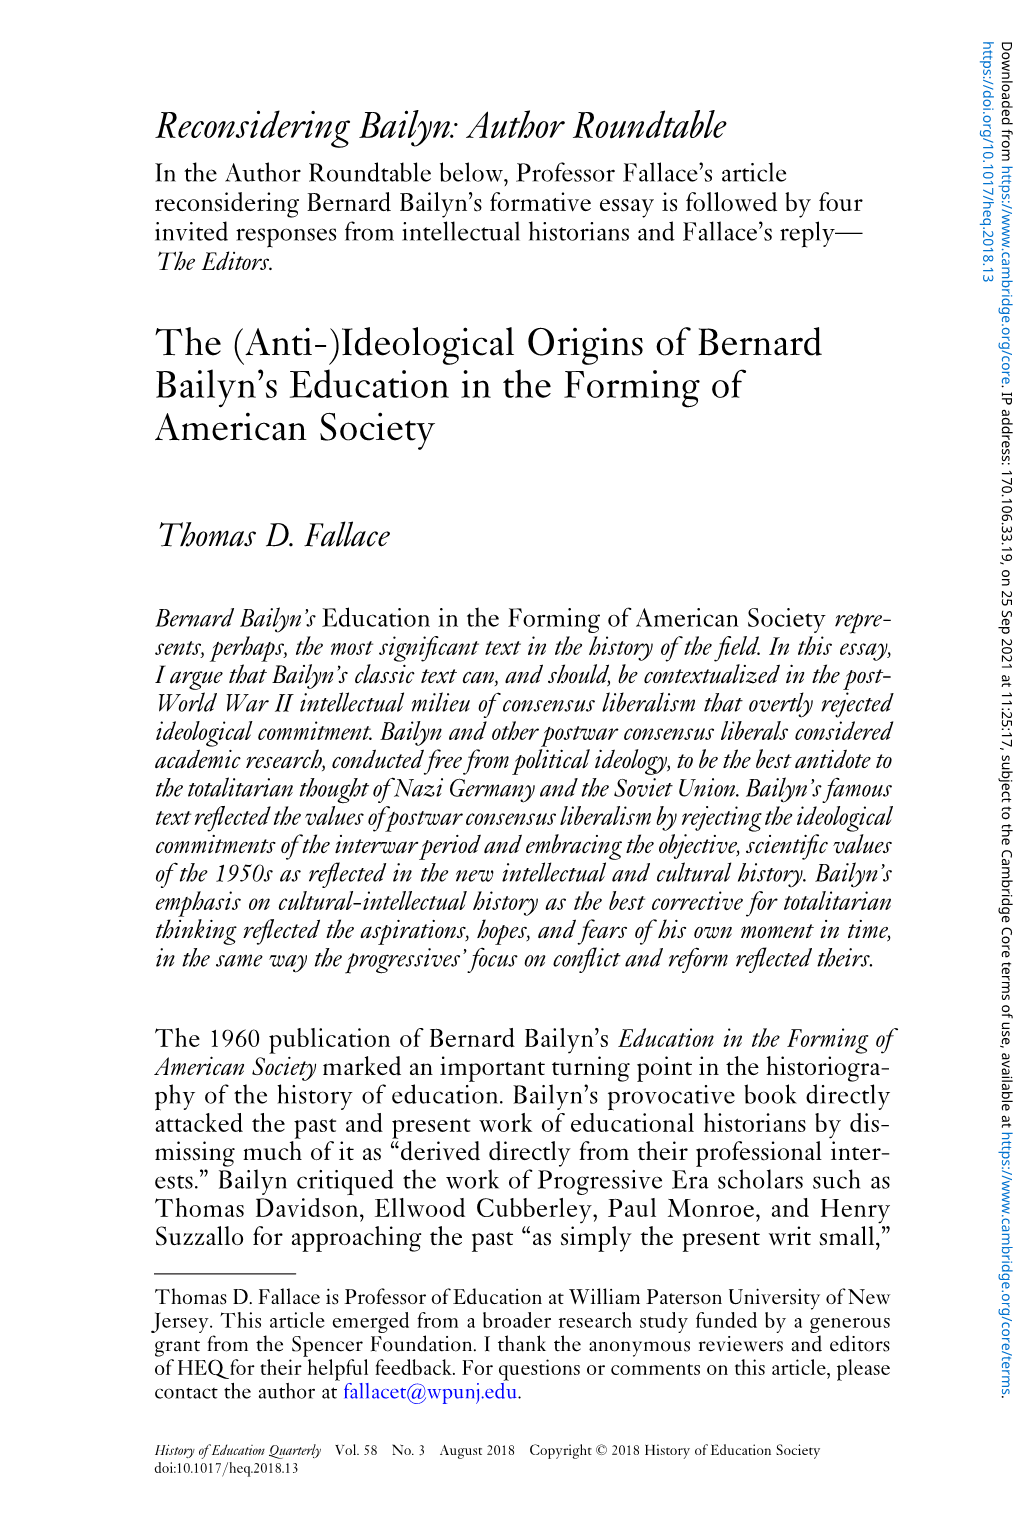 Ideological Origins of Bernard Bailyn's Education in the Forming of America